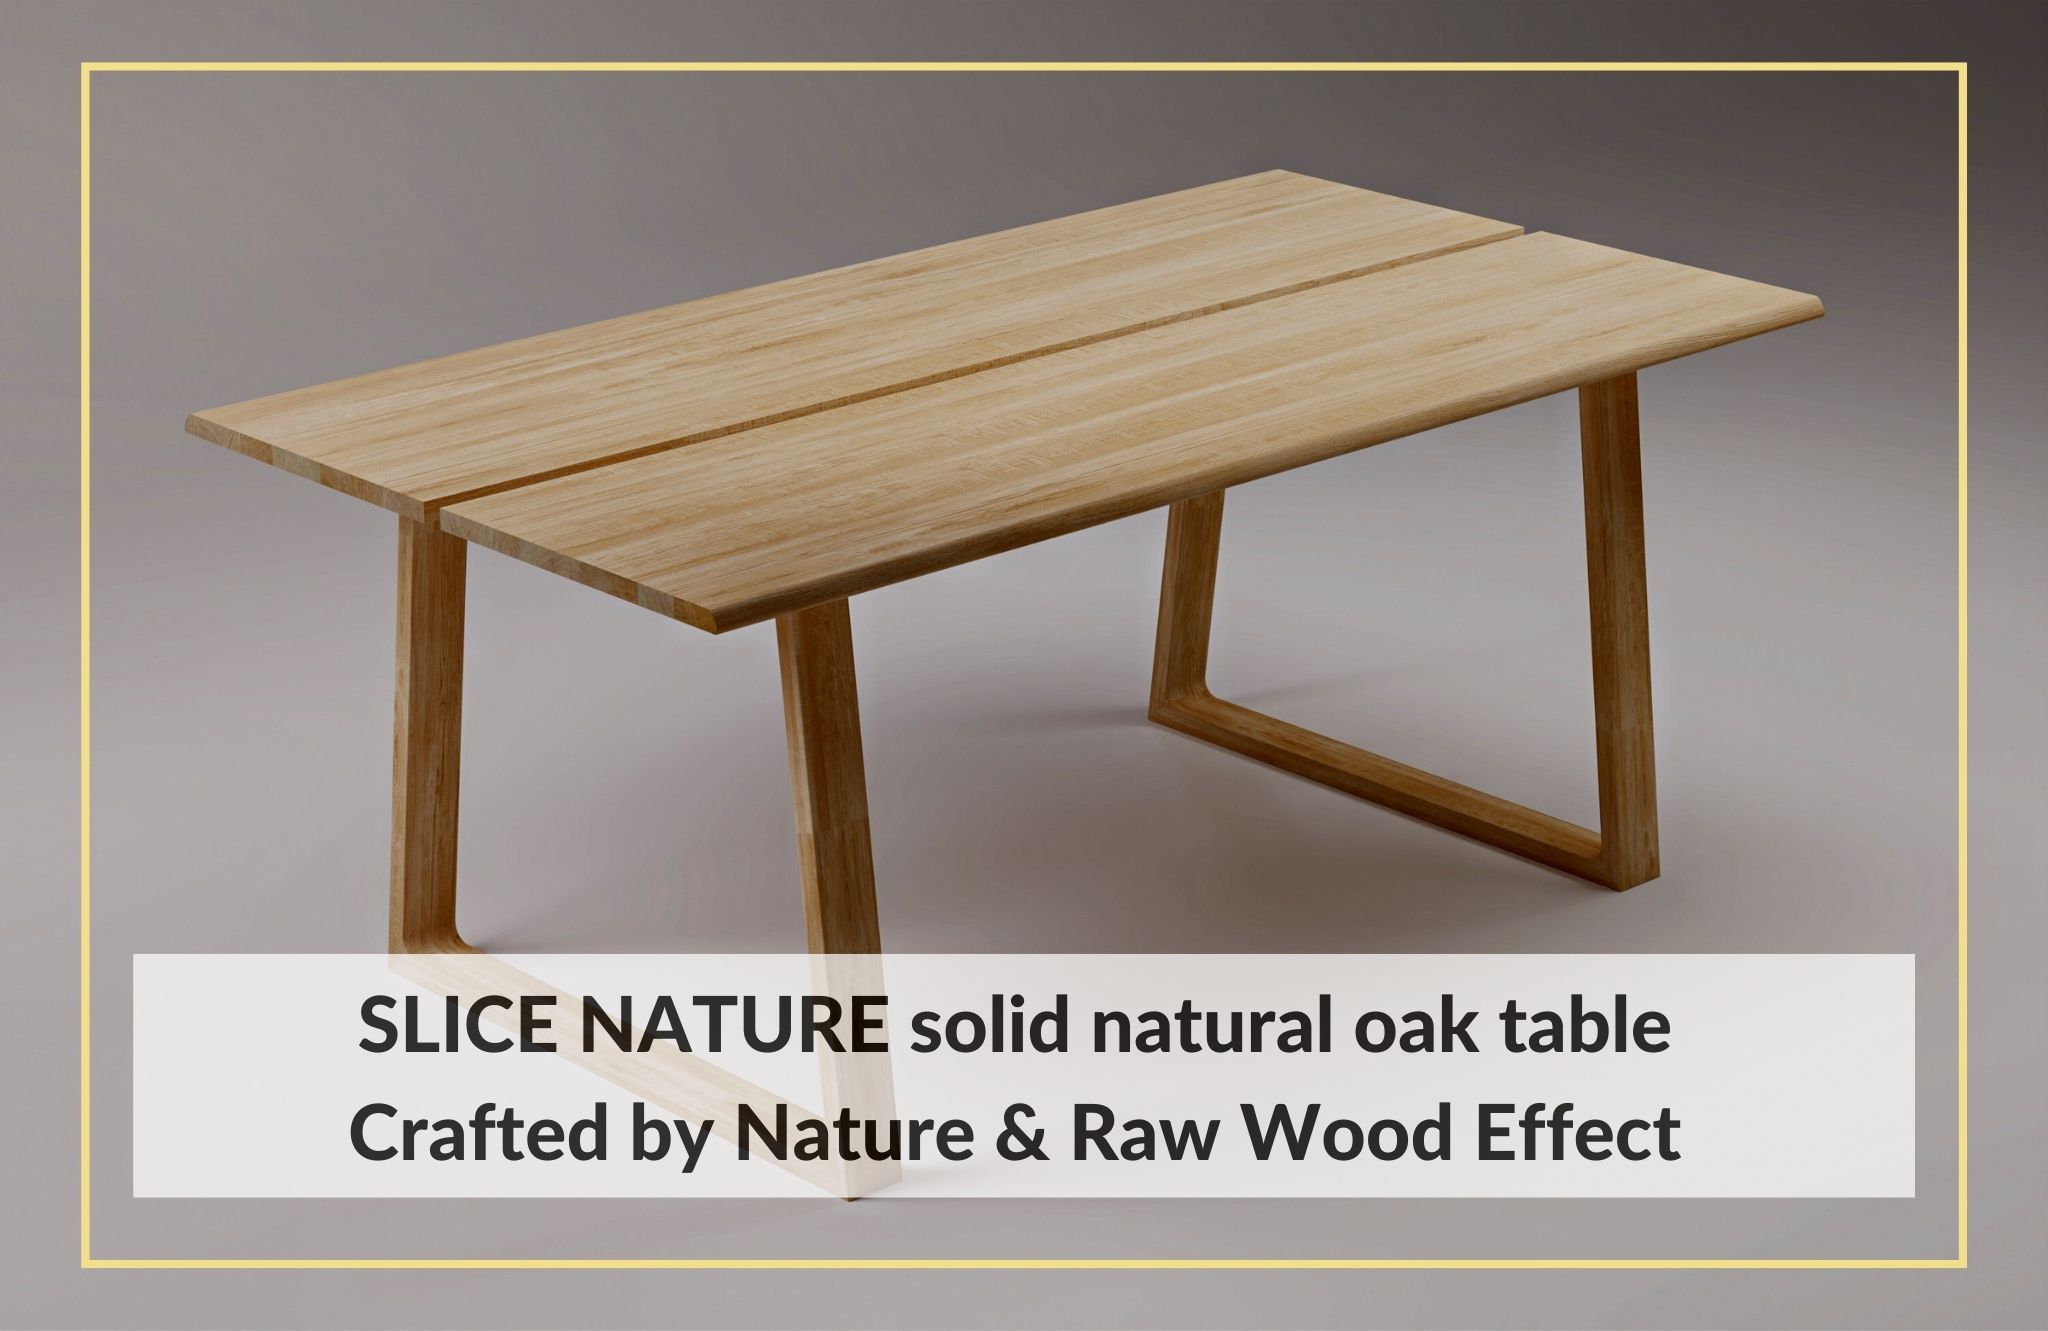 SLICE NATURE solid natural oak table